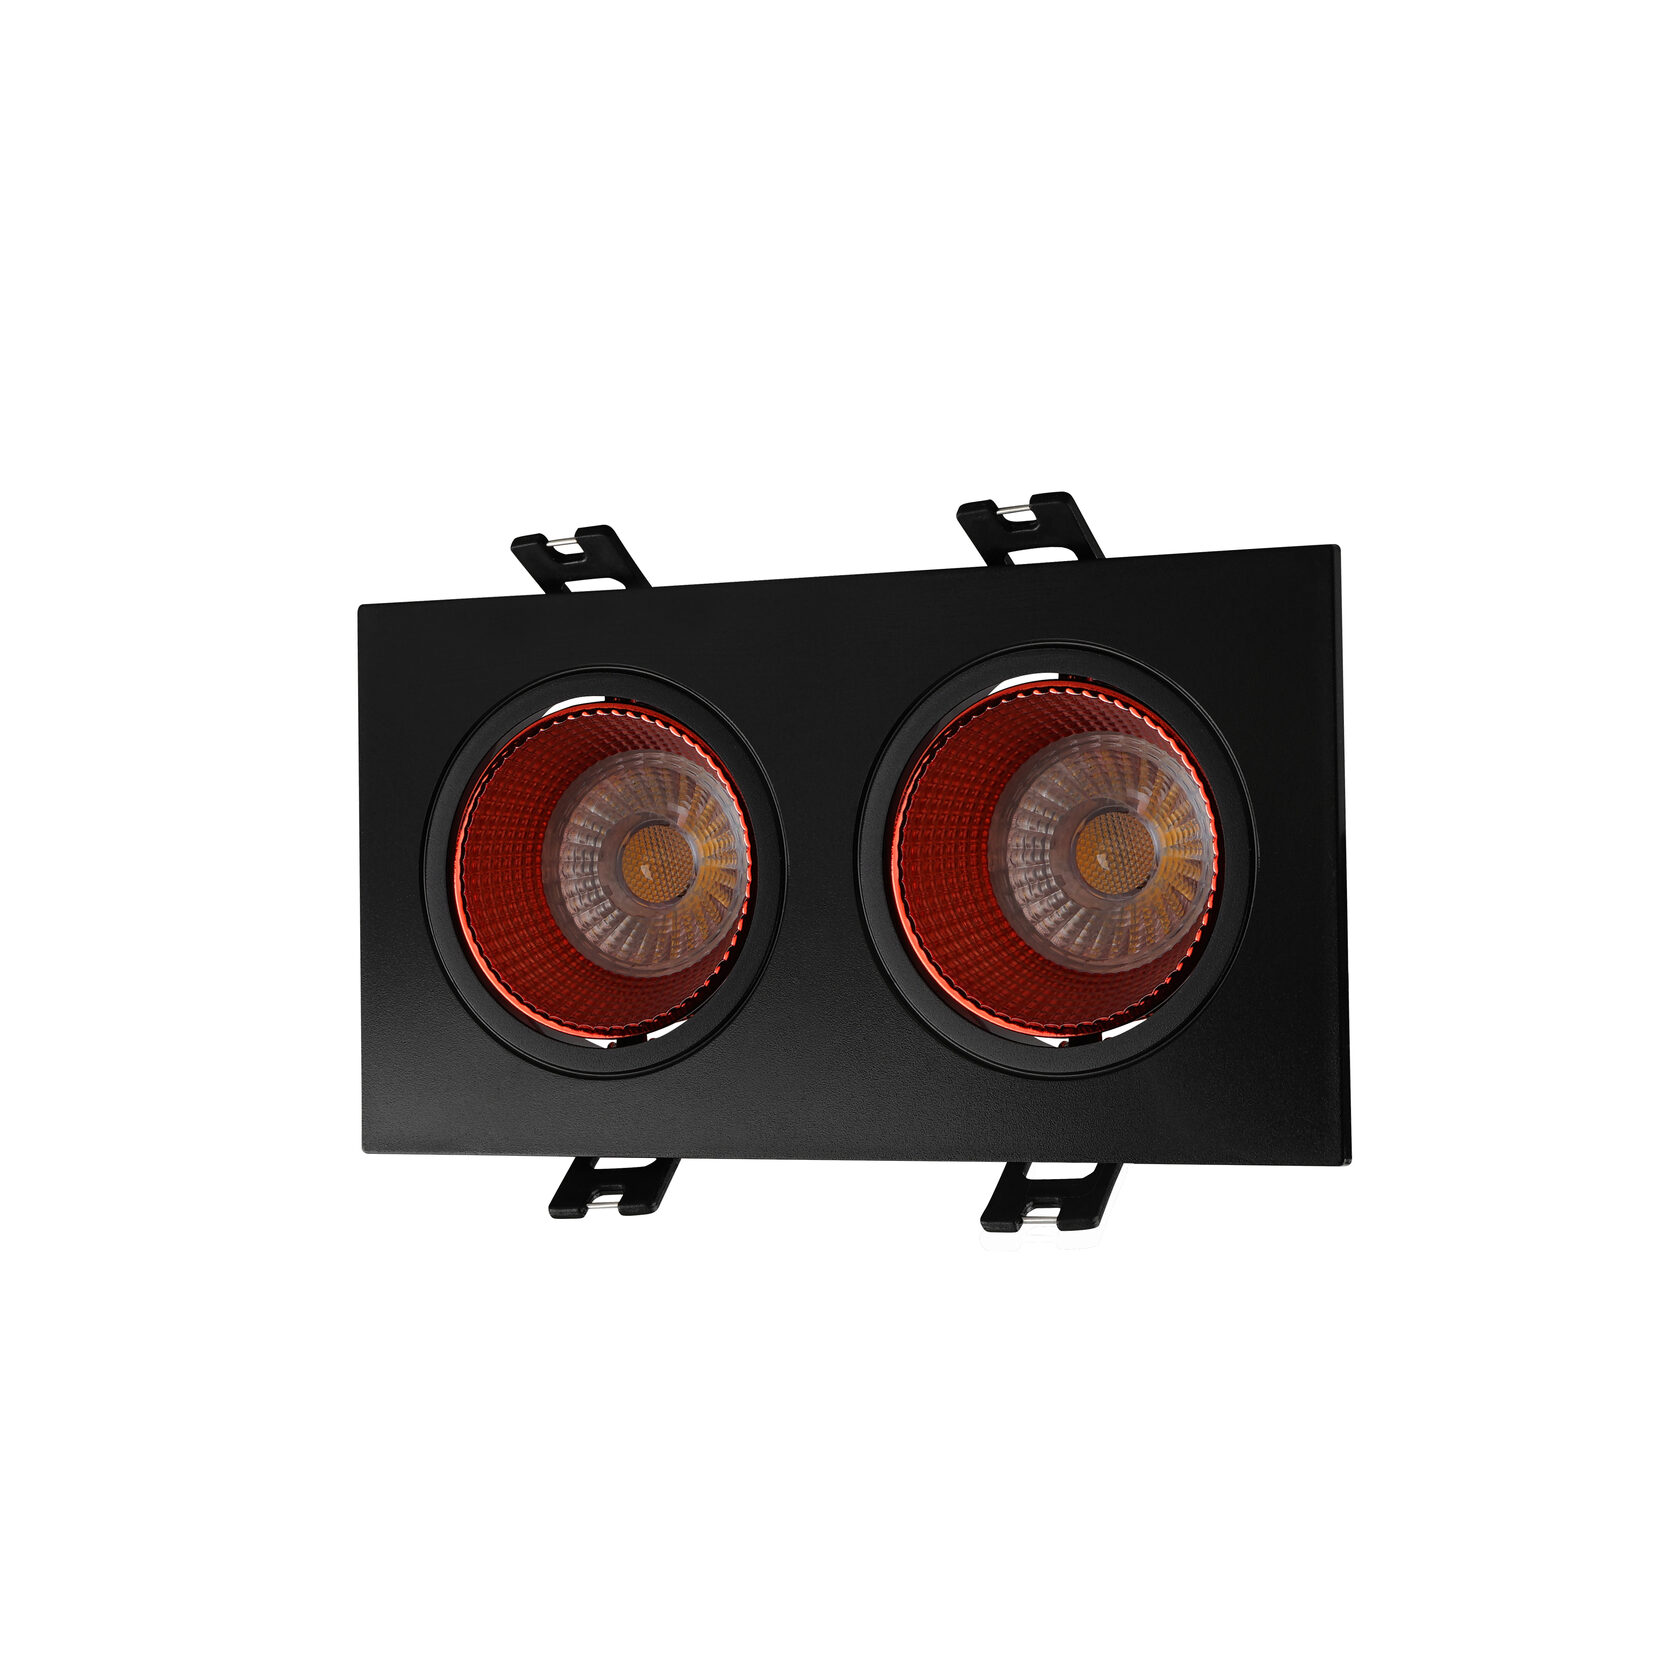 Встраиваемый светильник GU5.3 LED черный/красный пластик Denkirs DK3072-BK+RD DK3072-BK+RD